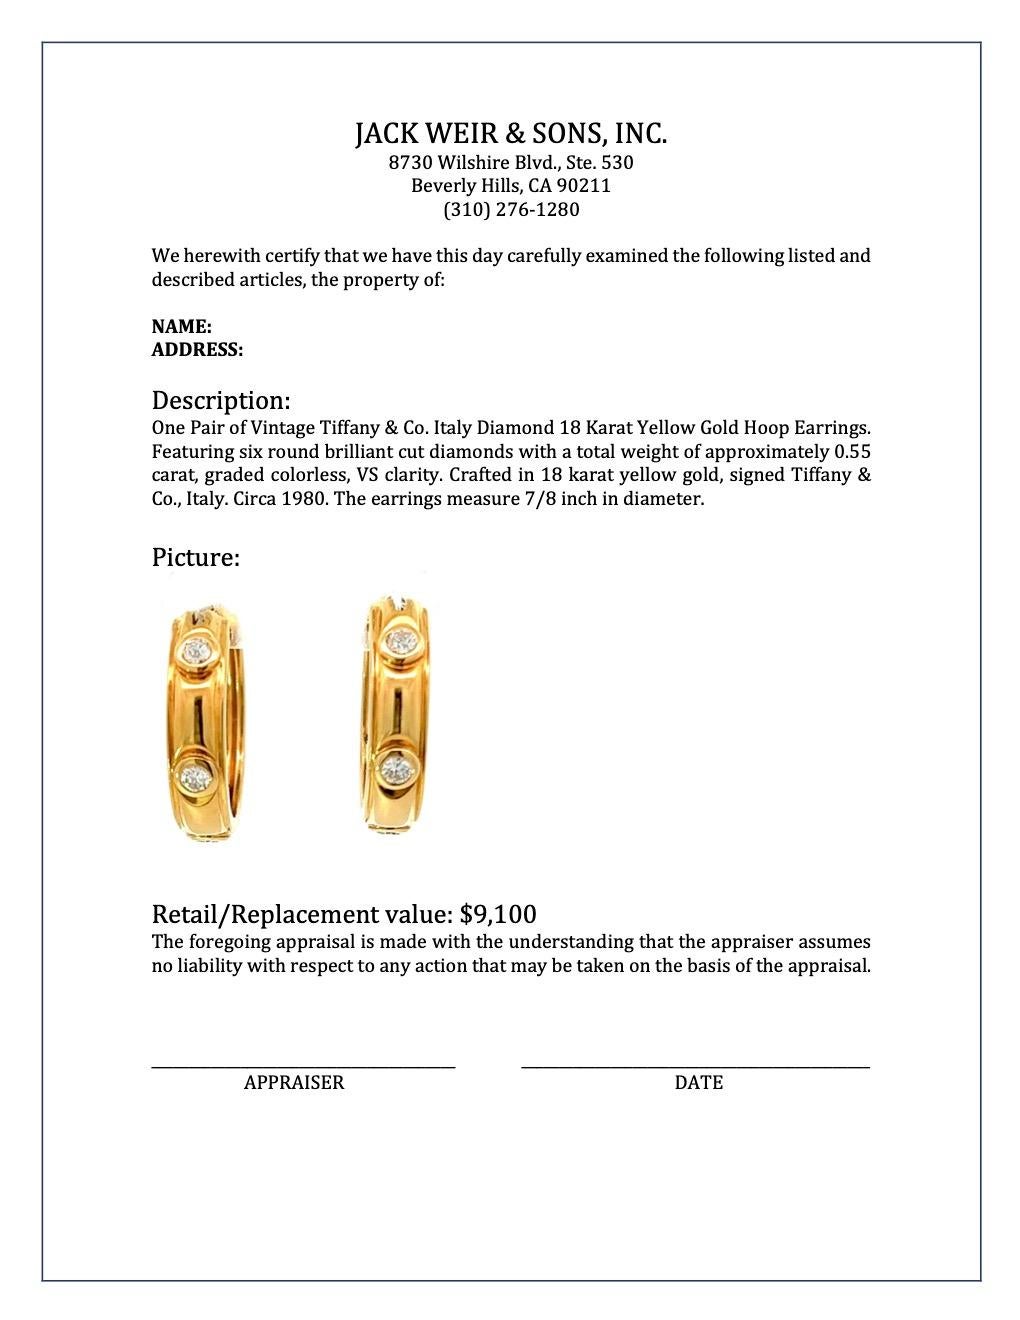 Vintage Tiffany & Co. Italy Diamond 18 Karat Yellow Gold Hoop Earrings 1